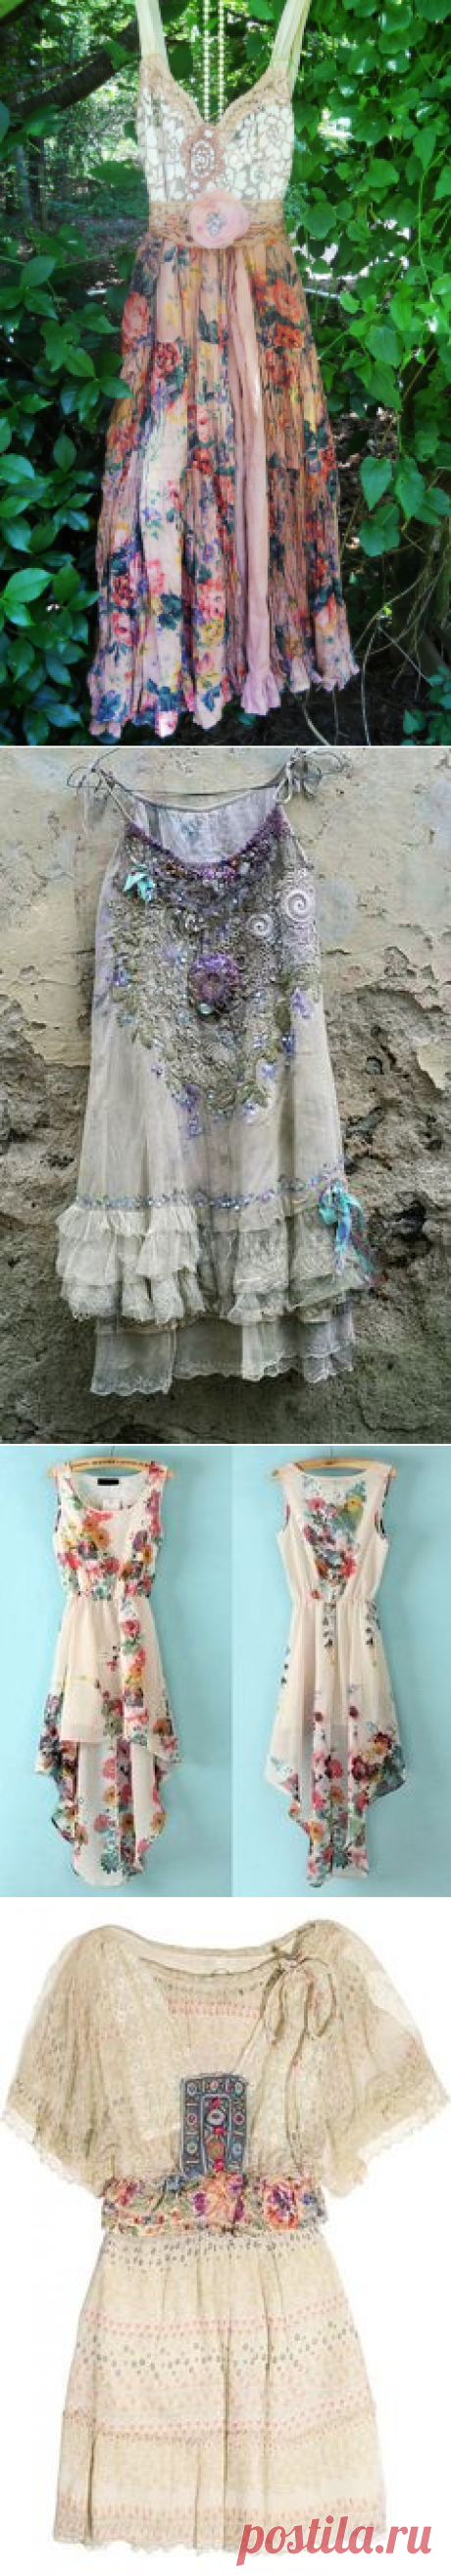 Boho floral dress ruffle cotton tea stained romantic shabby wedding prairie bohemian rose medium by vintage opulence on